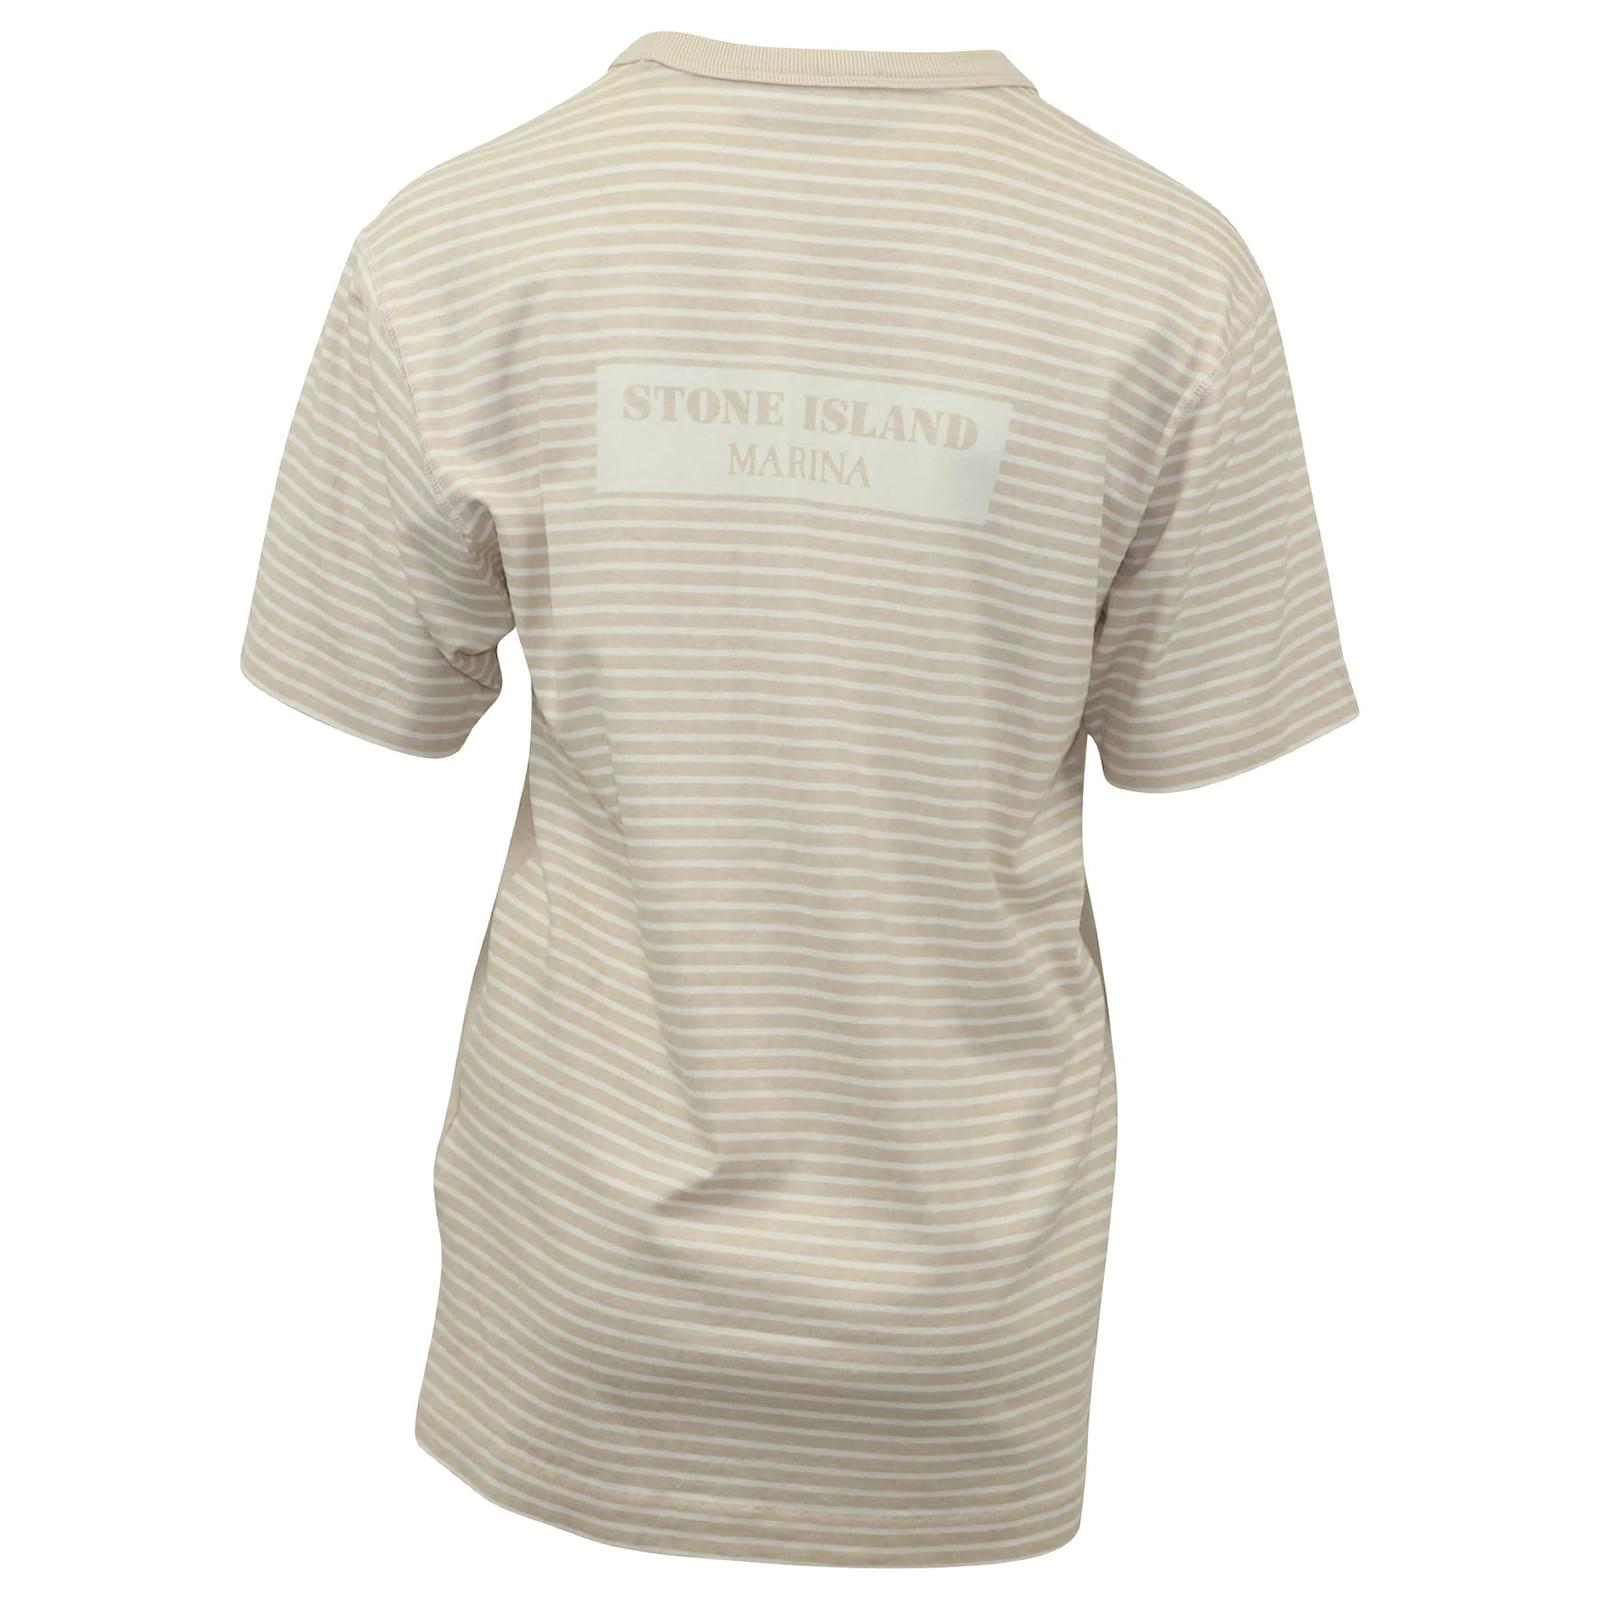 Stone Island Marina Logo-Print T-shirt in Beige Cotton Jersey ref